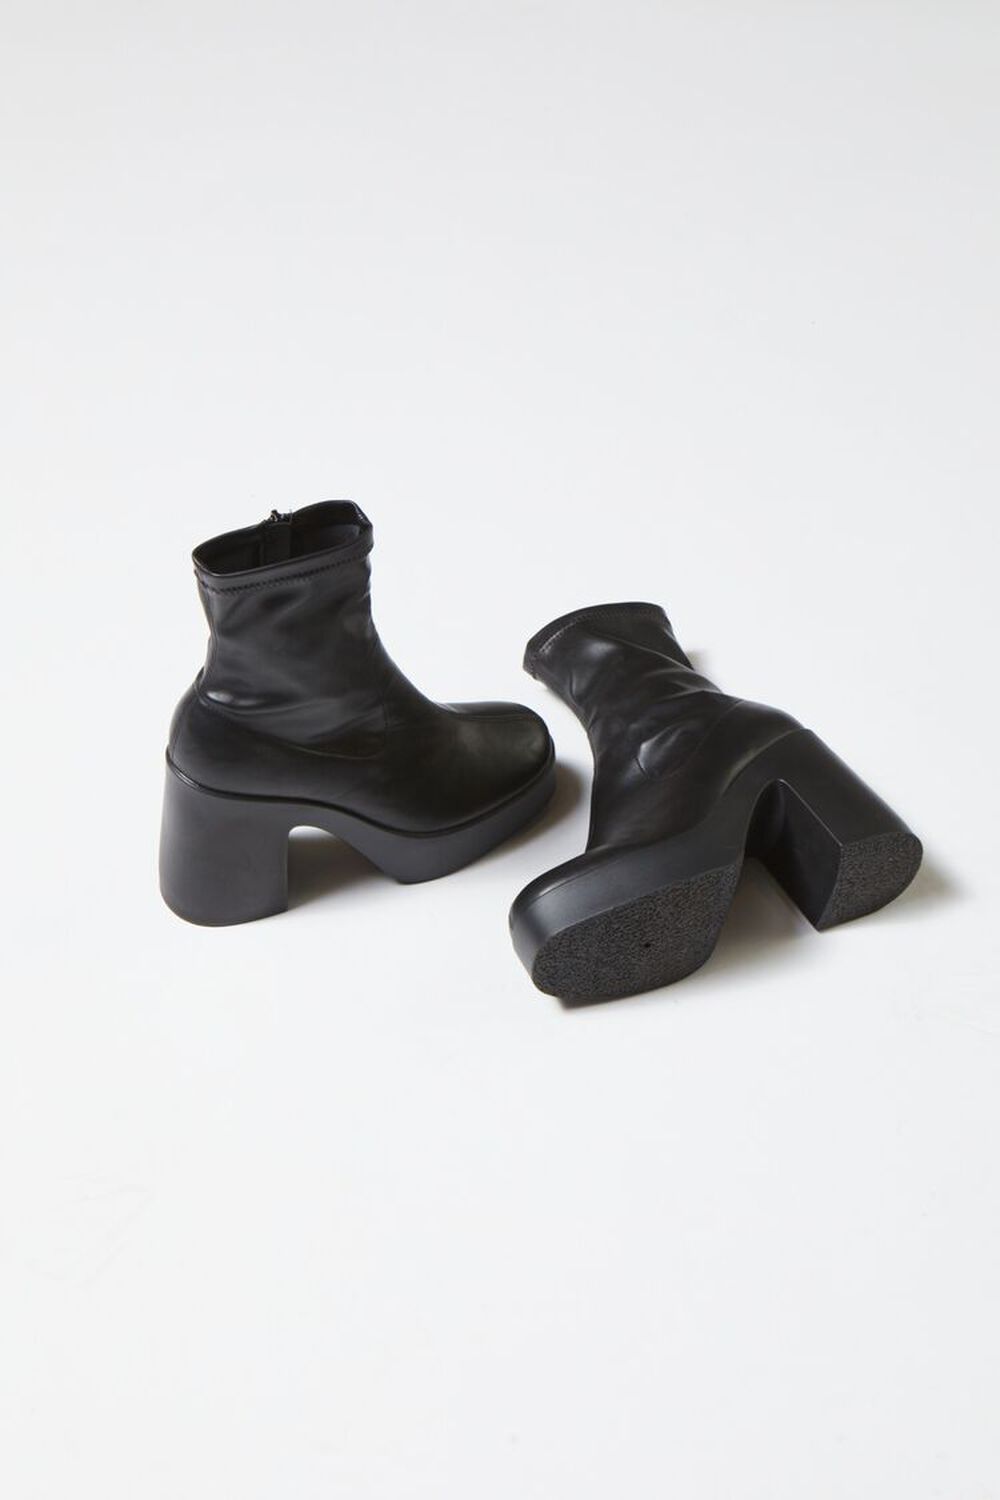 BLACK Faux Leather Block Heel Booties, image 1